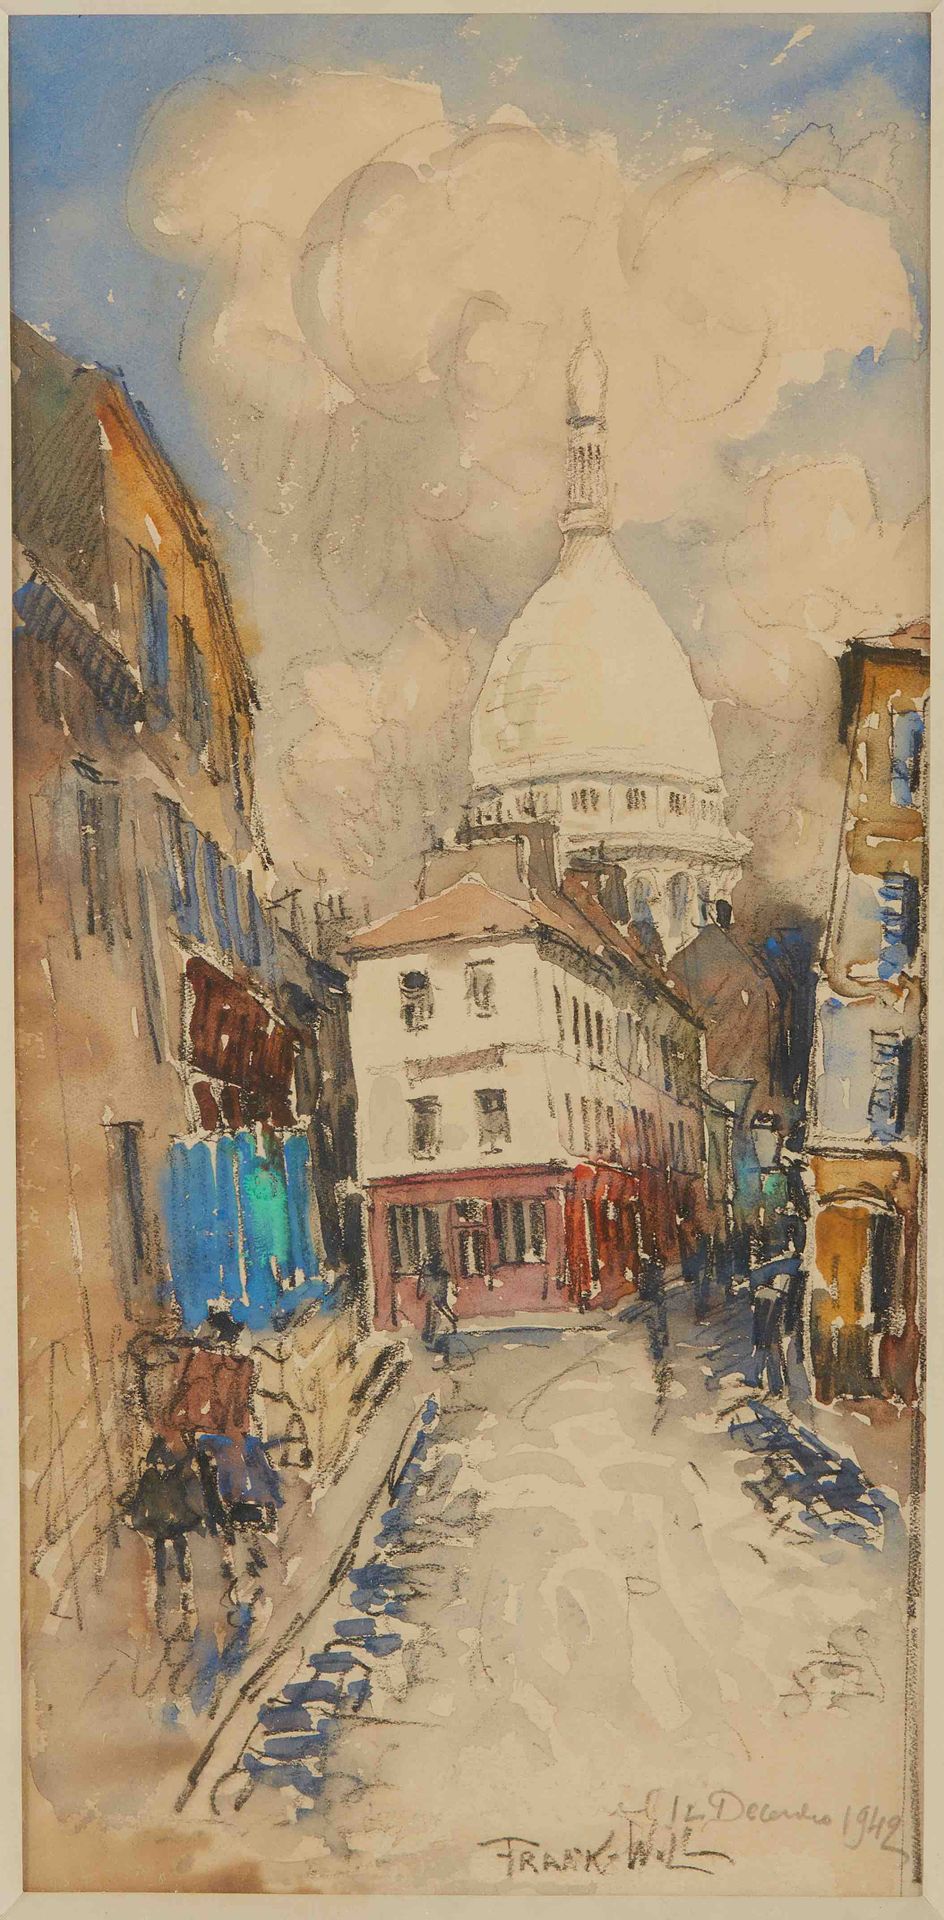 Null FRANK-WILL (1900-1951)

Montmartre

Acuarela sobre papel firmada abajo a la&hellip;